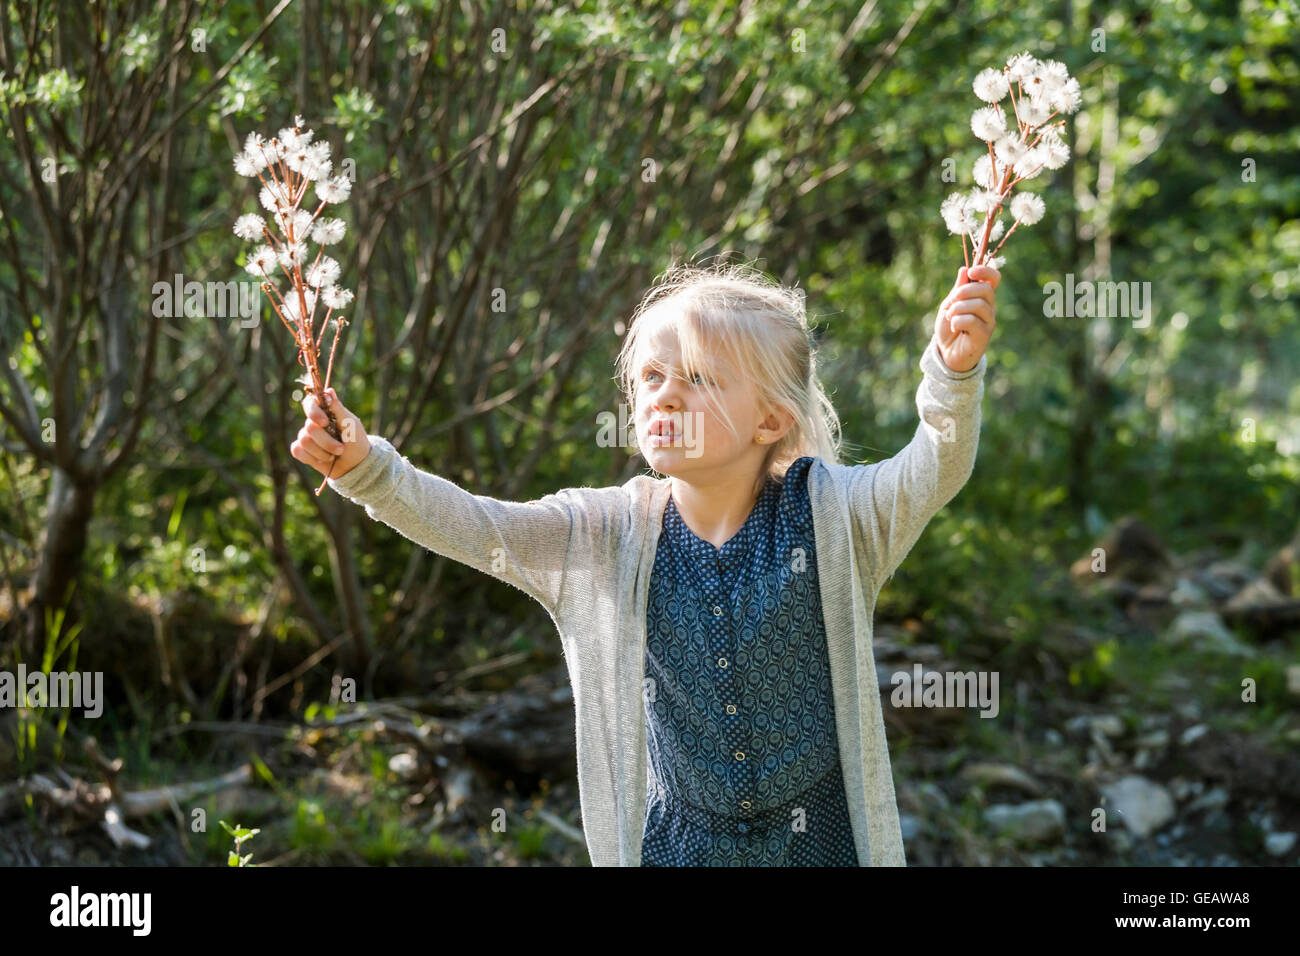 Petite fille blonde holding ombelles dans ses mains Banque D'Images